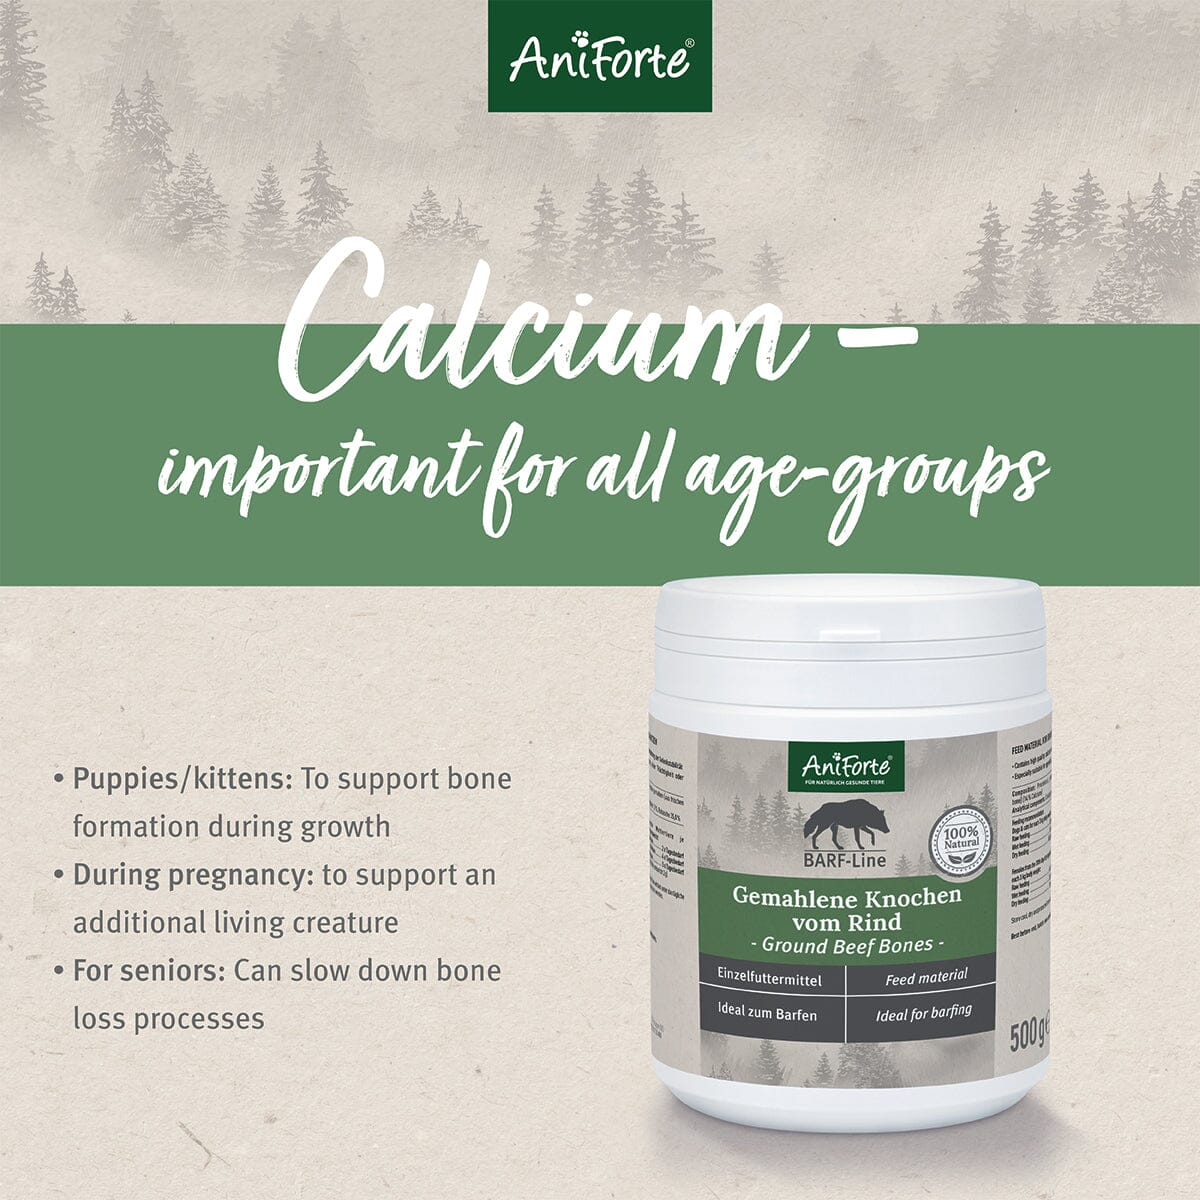 Ground Beef Bones - Natural Calcium Supplement for Dogs & Cats - AniForte UK